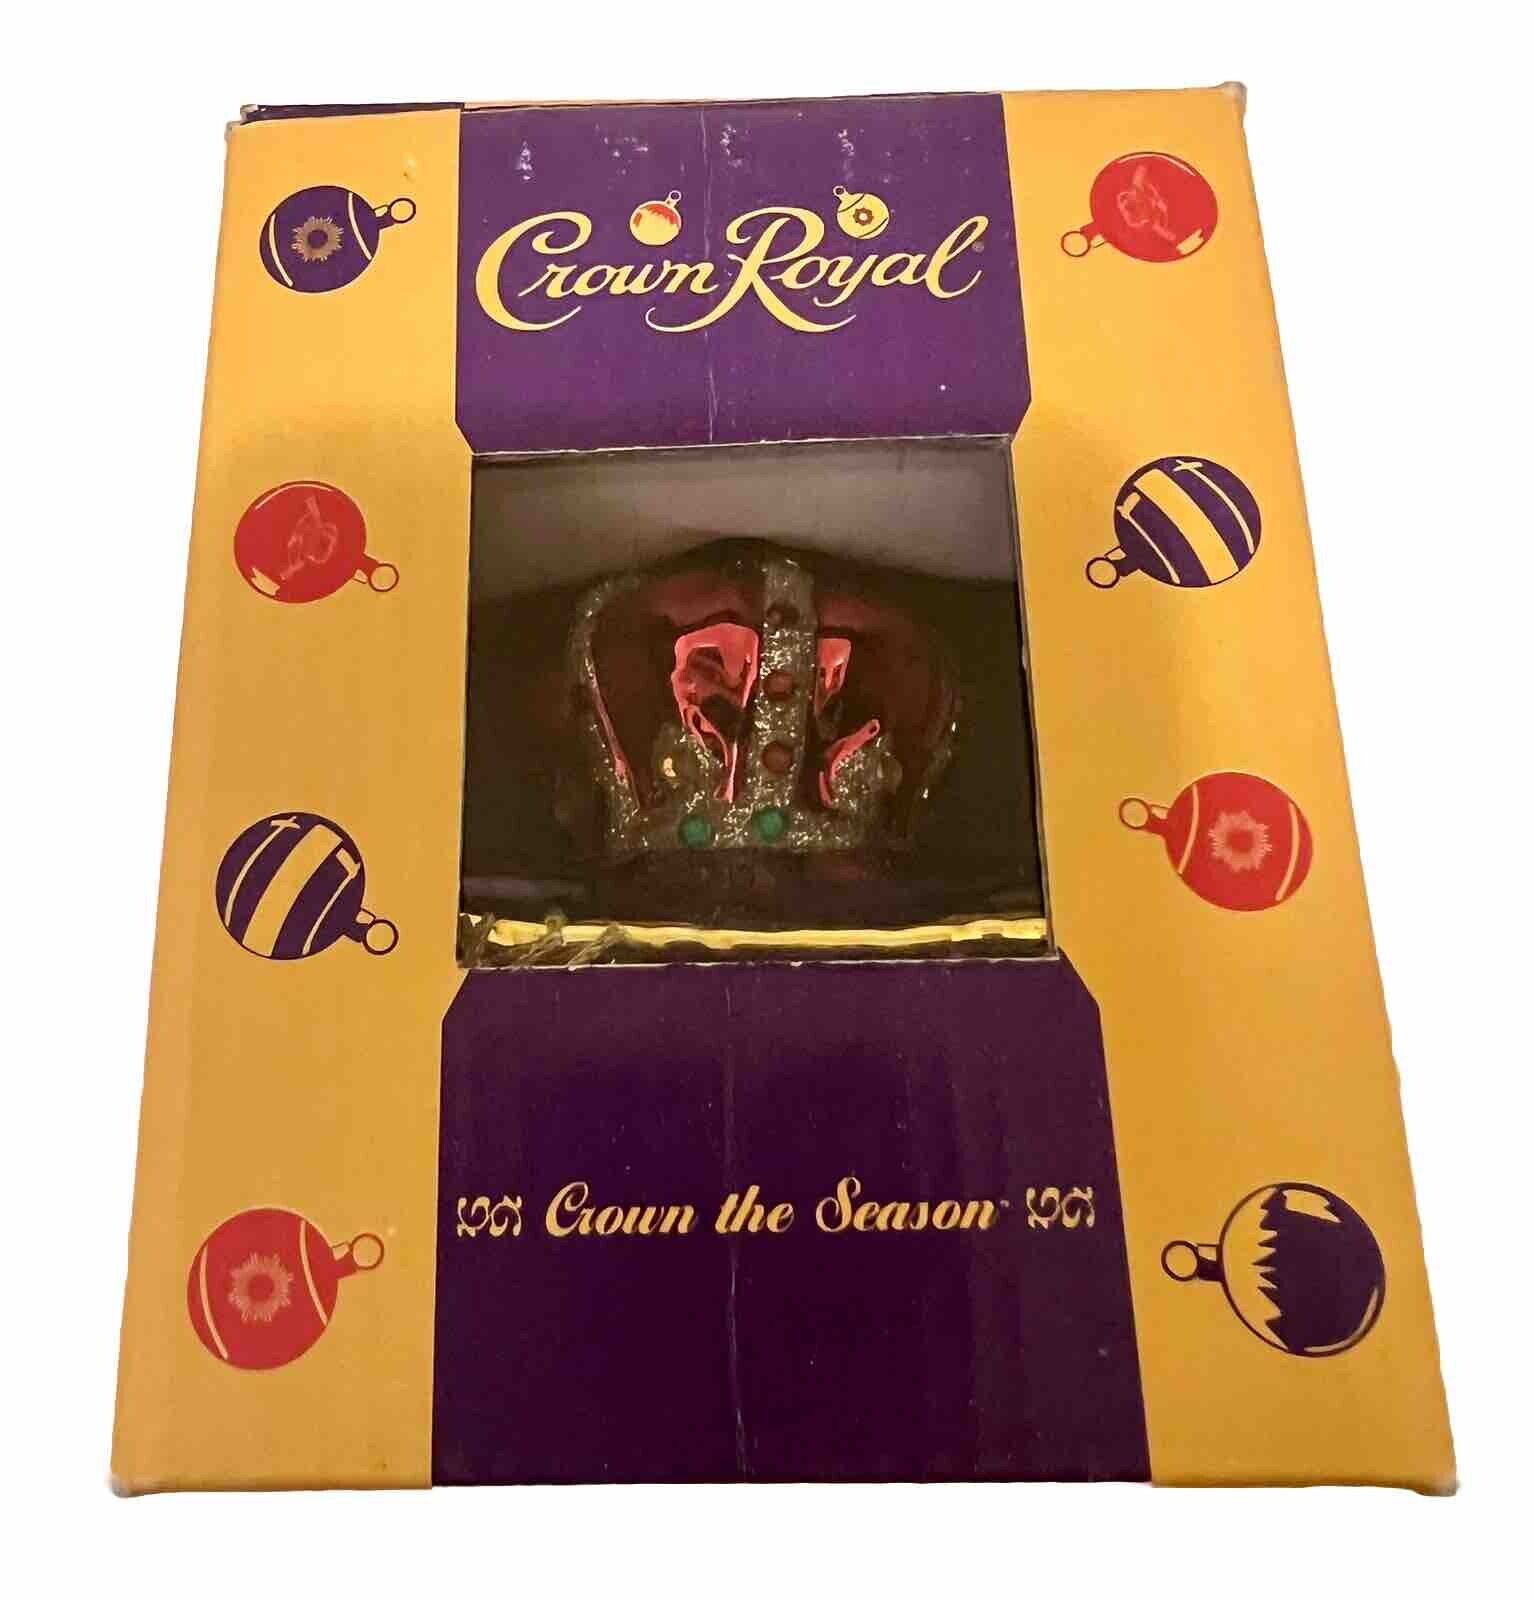 Crown Royal Christmas Ornament - Brand New with Original Box